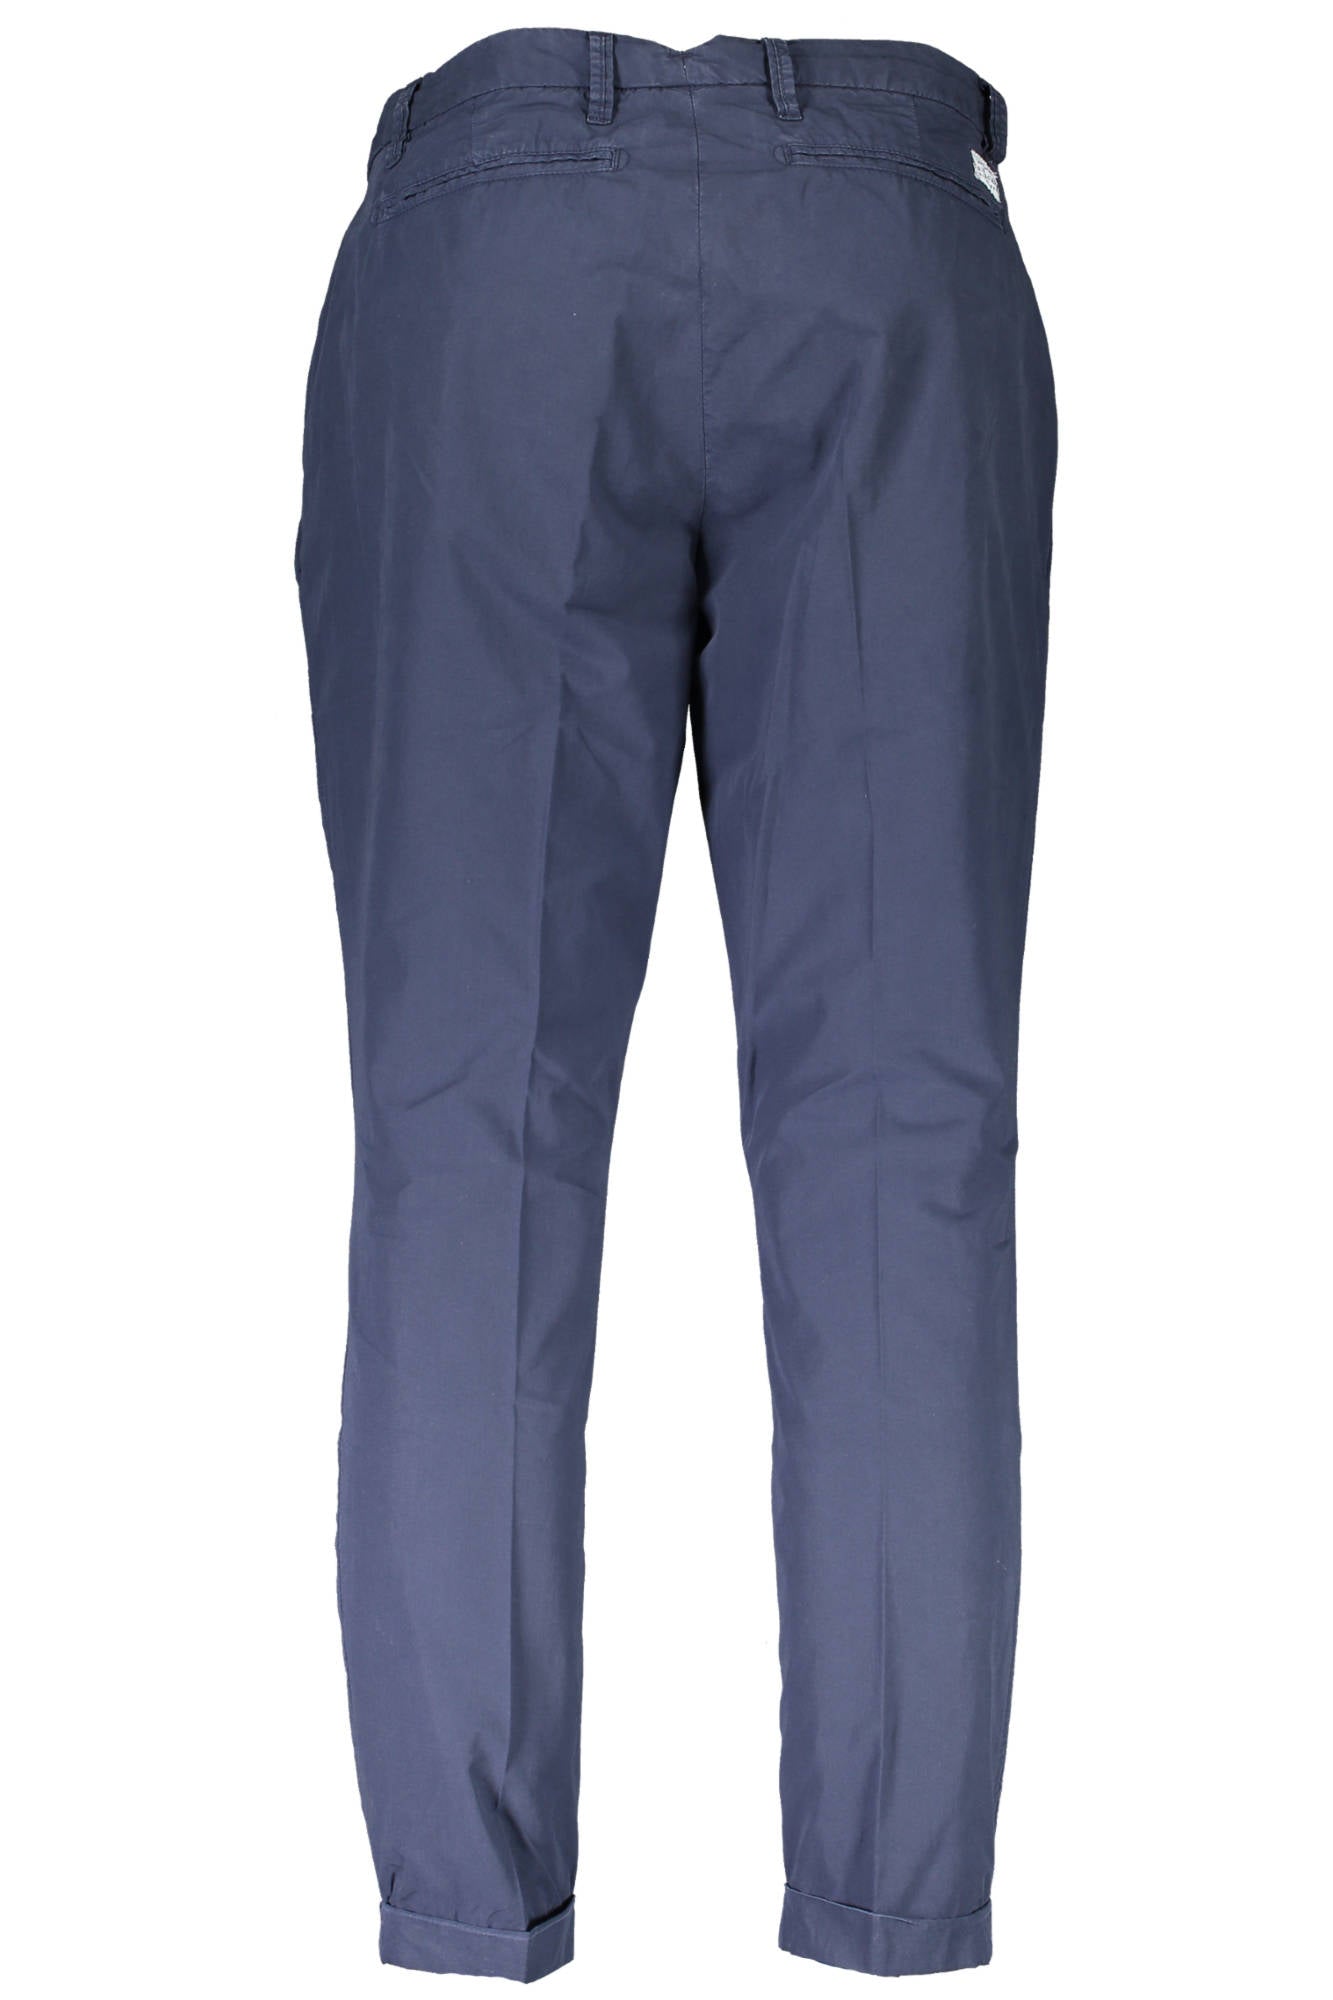 U.S. POLO ASSN. Blue Jeans & Pant - Fizigo